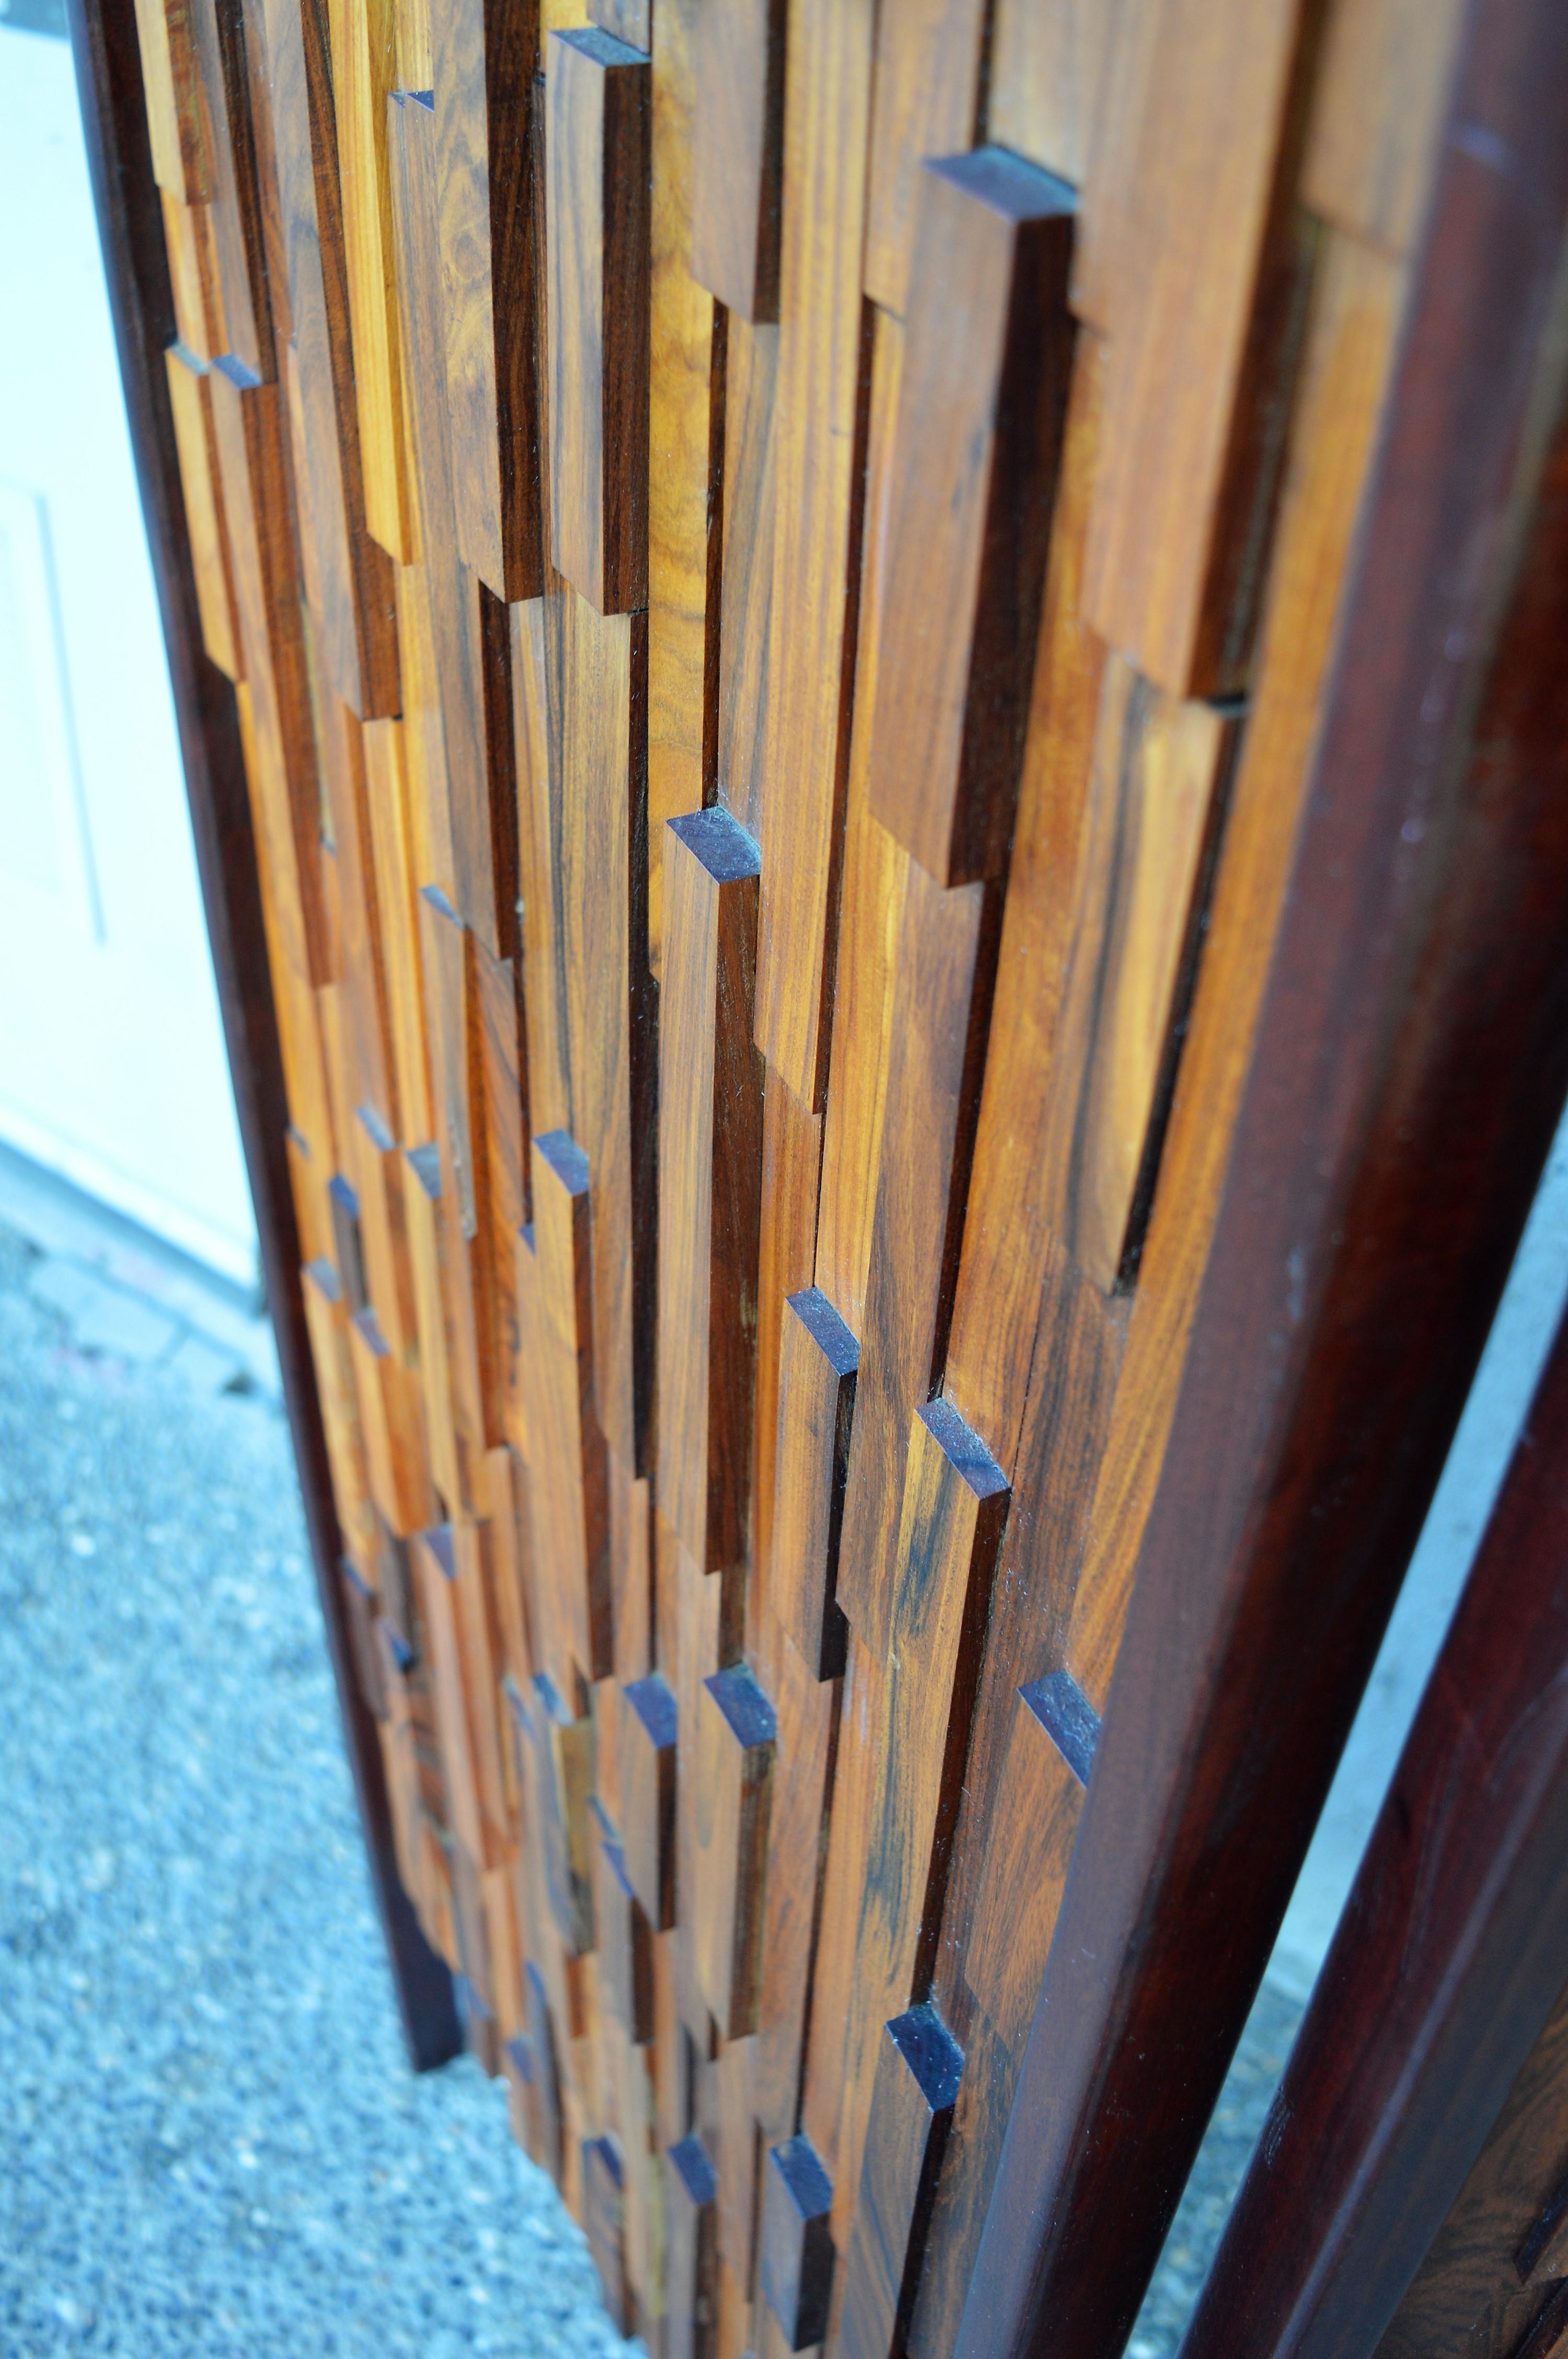 Brazilian Percival Lafer Exotic Hardwood Mosaic 3-Panel Screen / Room Divider For Sale